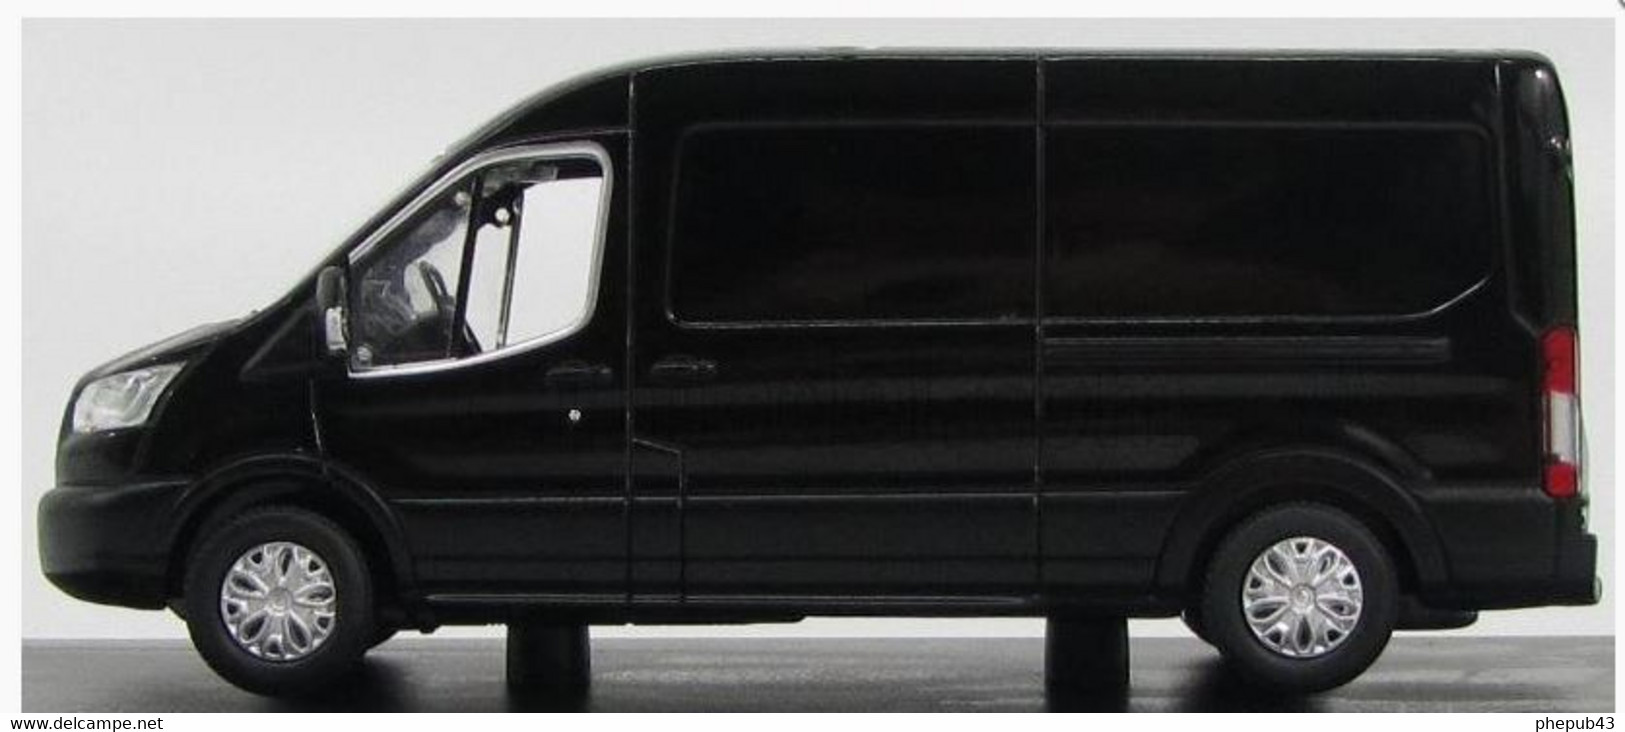 Ford Transit Van - 2015 - Black - Greenlight - Commercial Vehicles